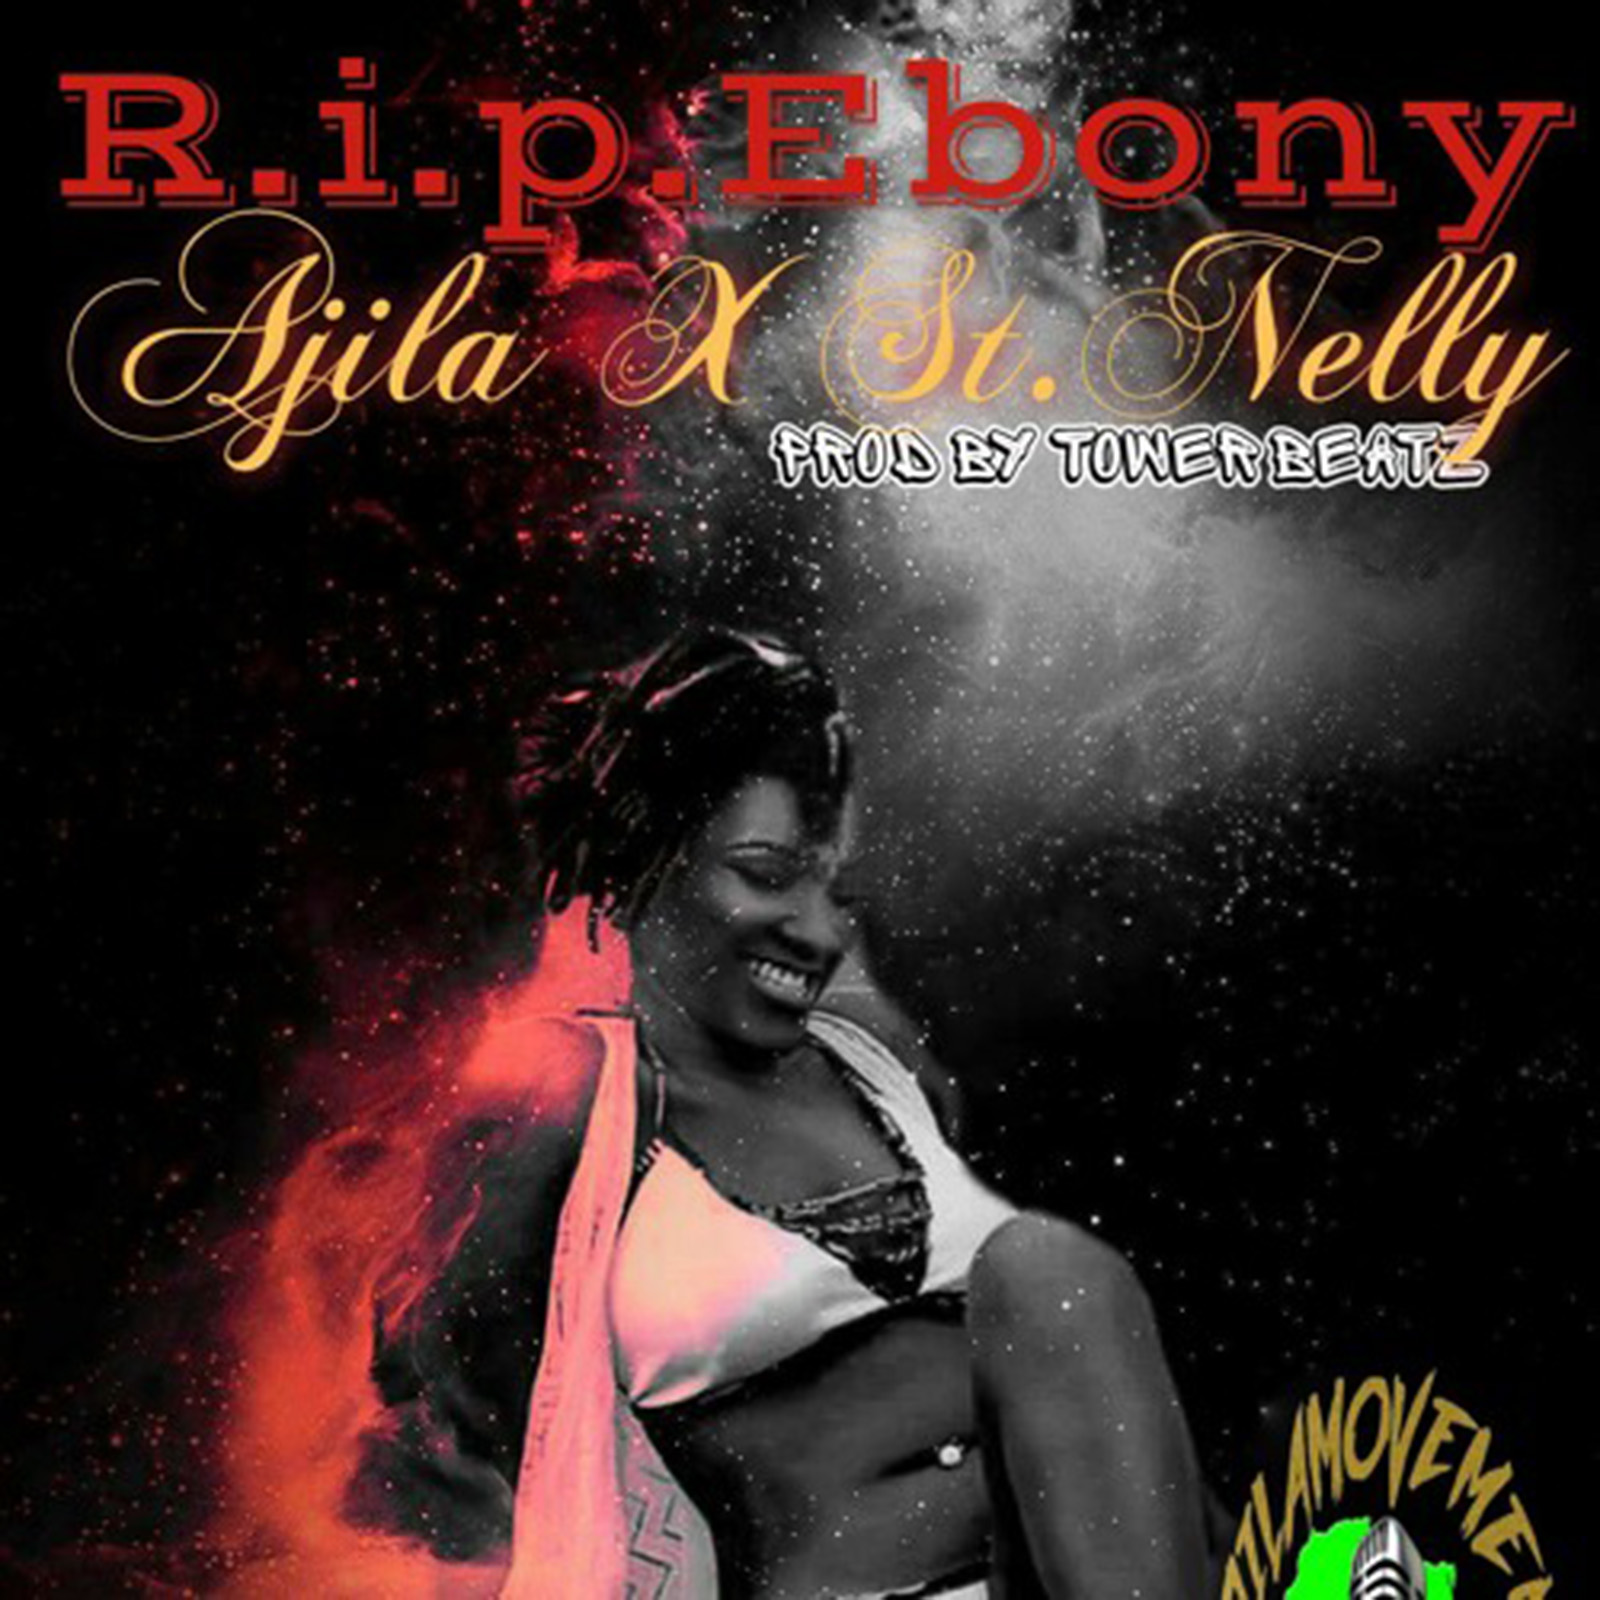 R. I. P Ebony by Ajila & St. Nelly